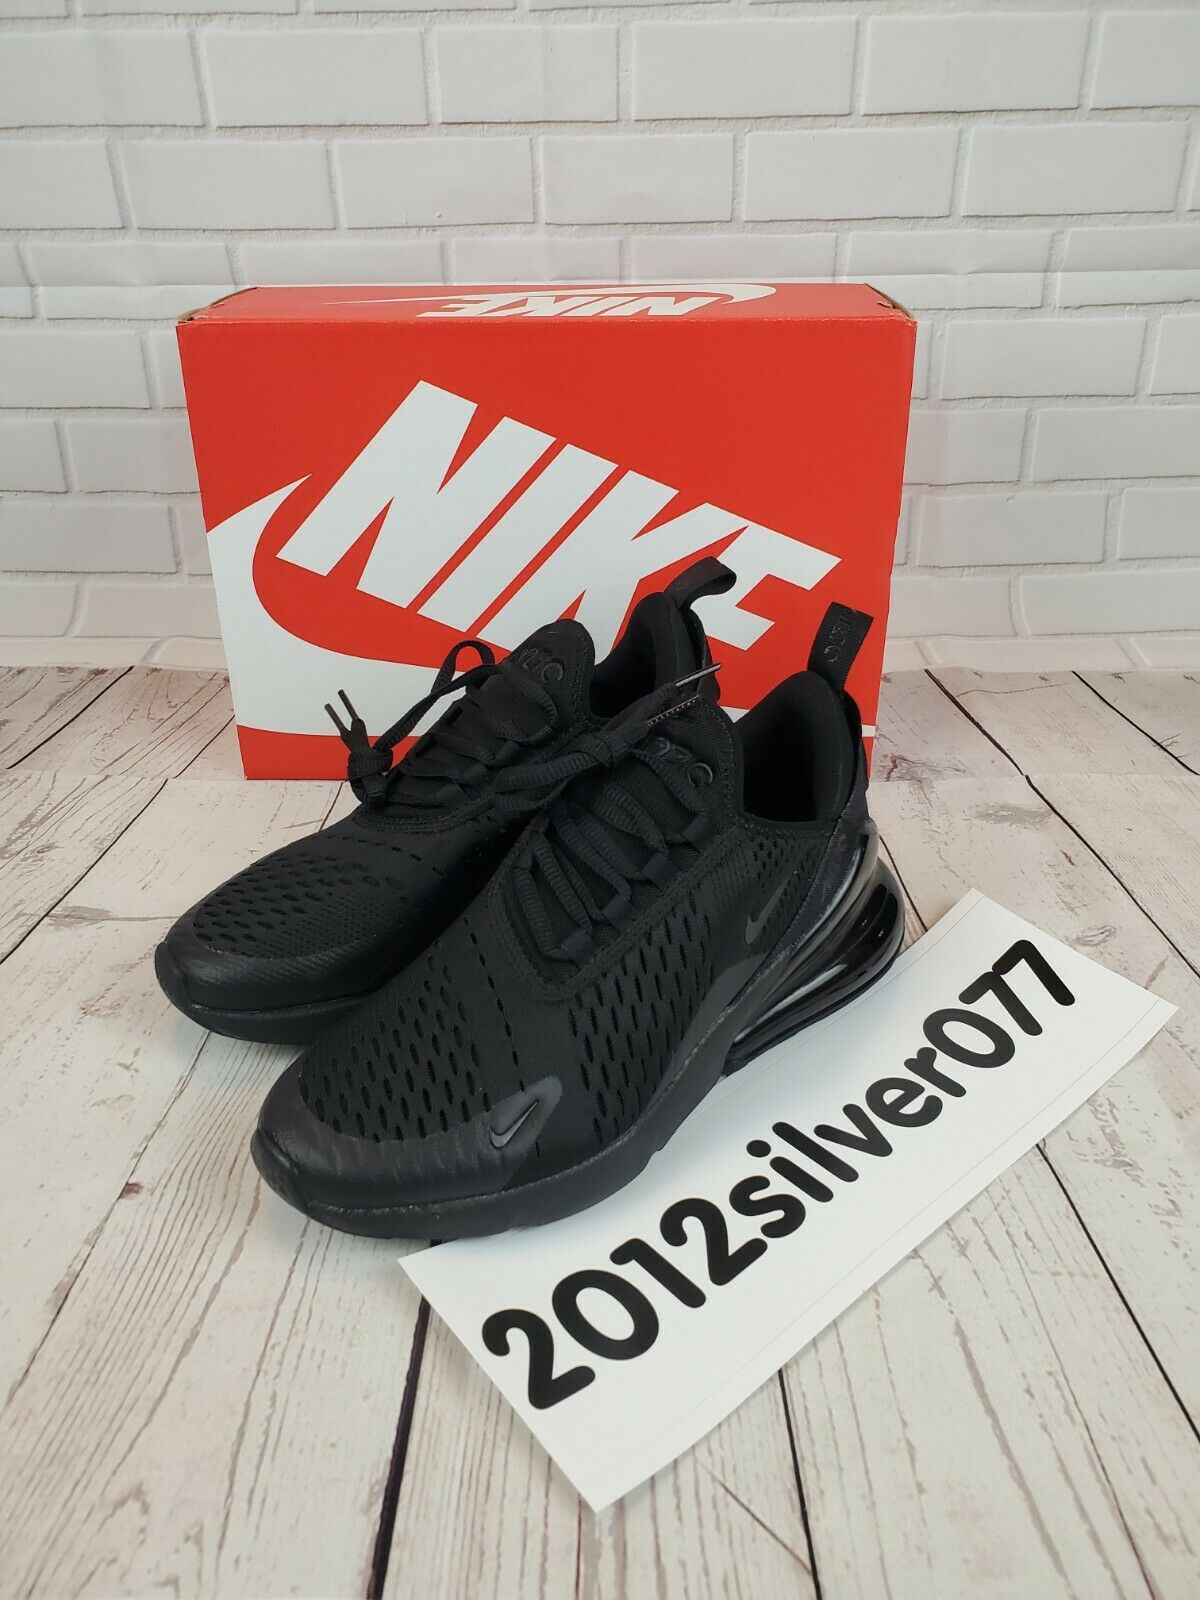 Nike Air Max 270 GS 'Triple Black' BQ5776-001 Running Shoes Size 7Y =Women's 8.5